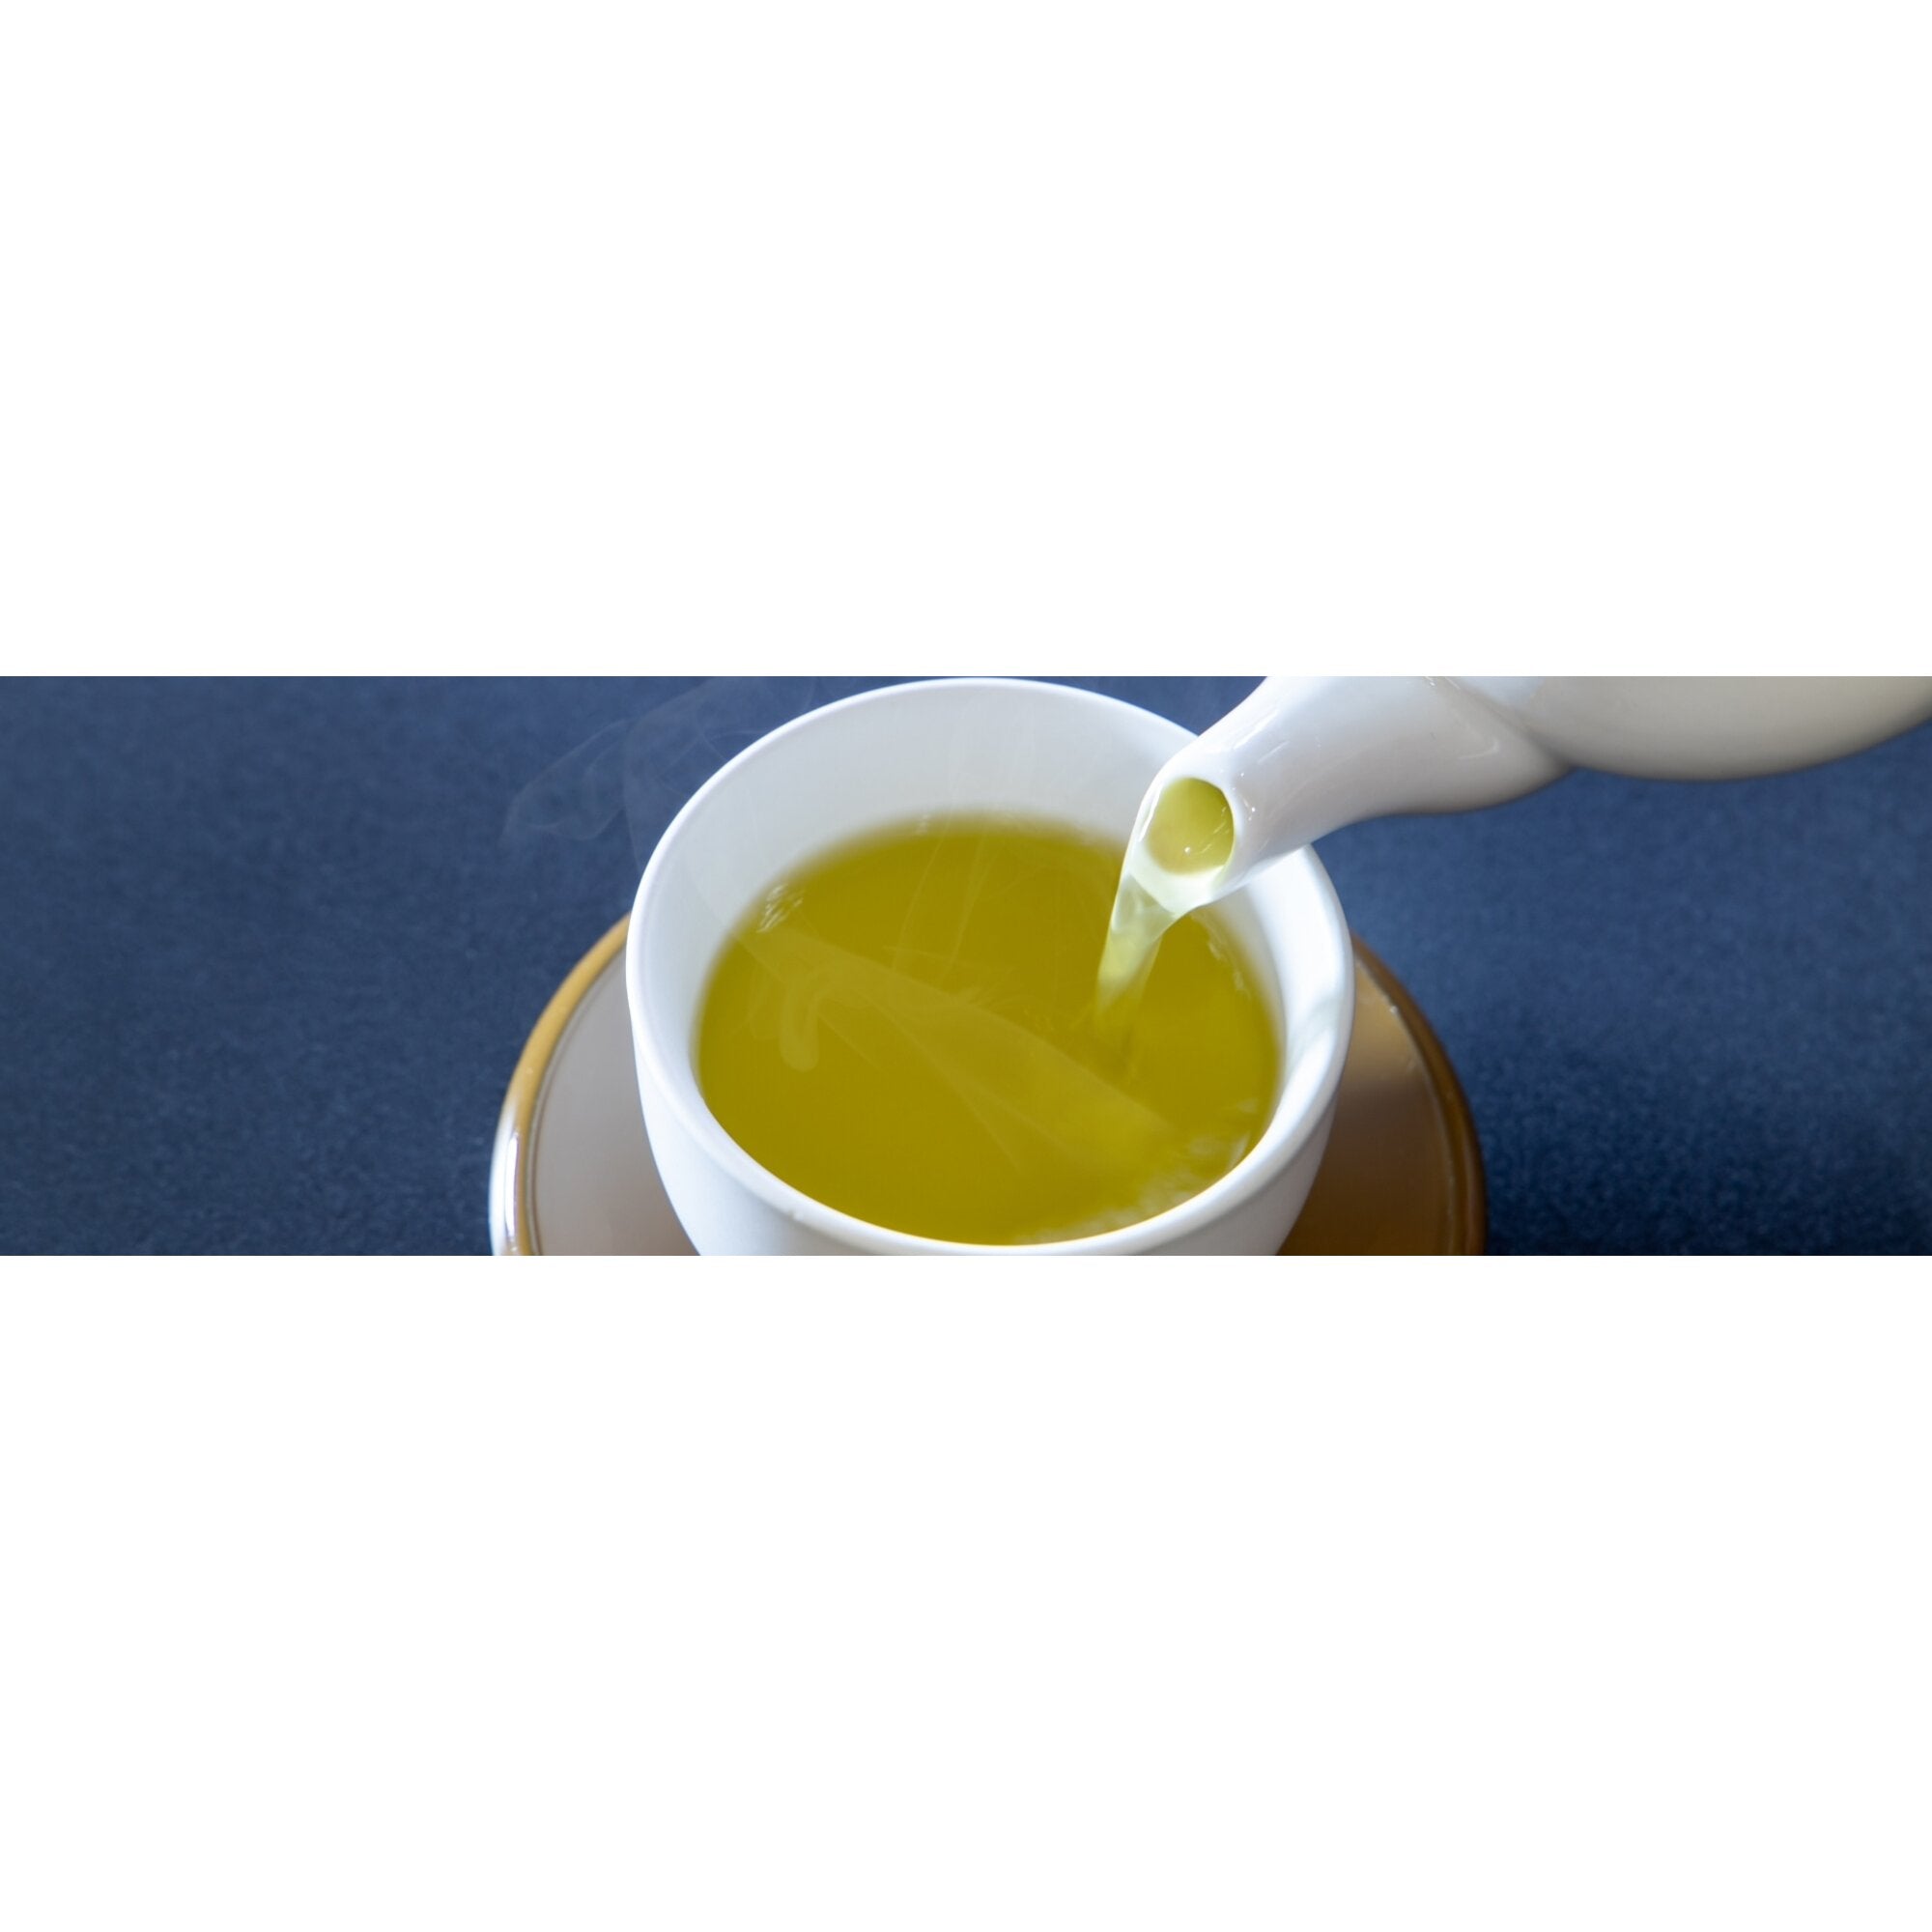 Oigawa Healing Zen Platinum Japanese Green Tea 100g